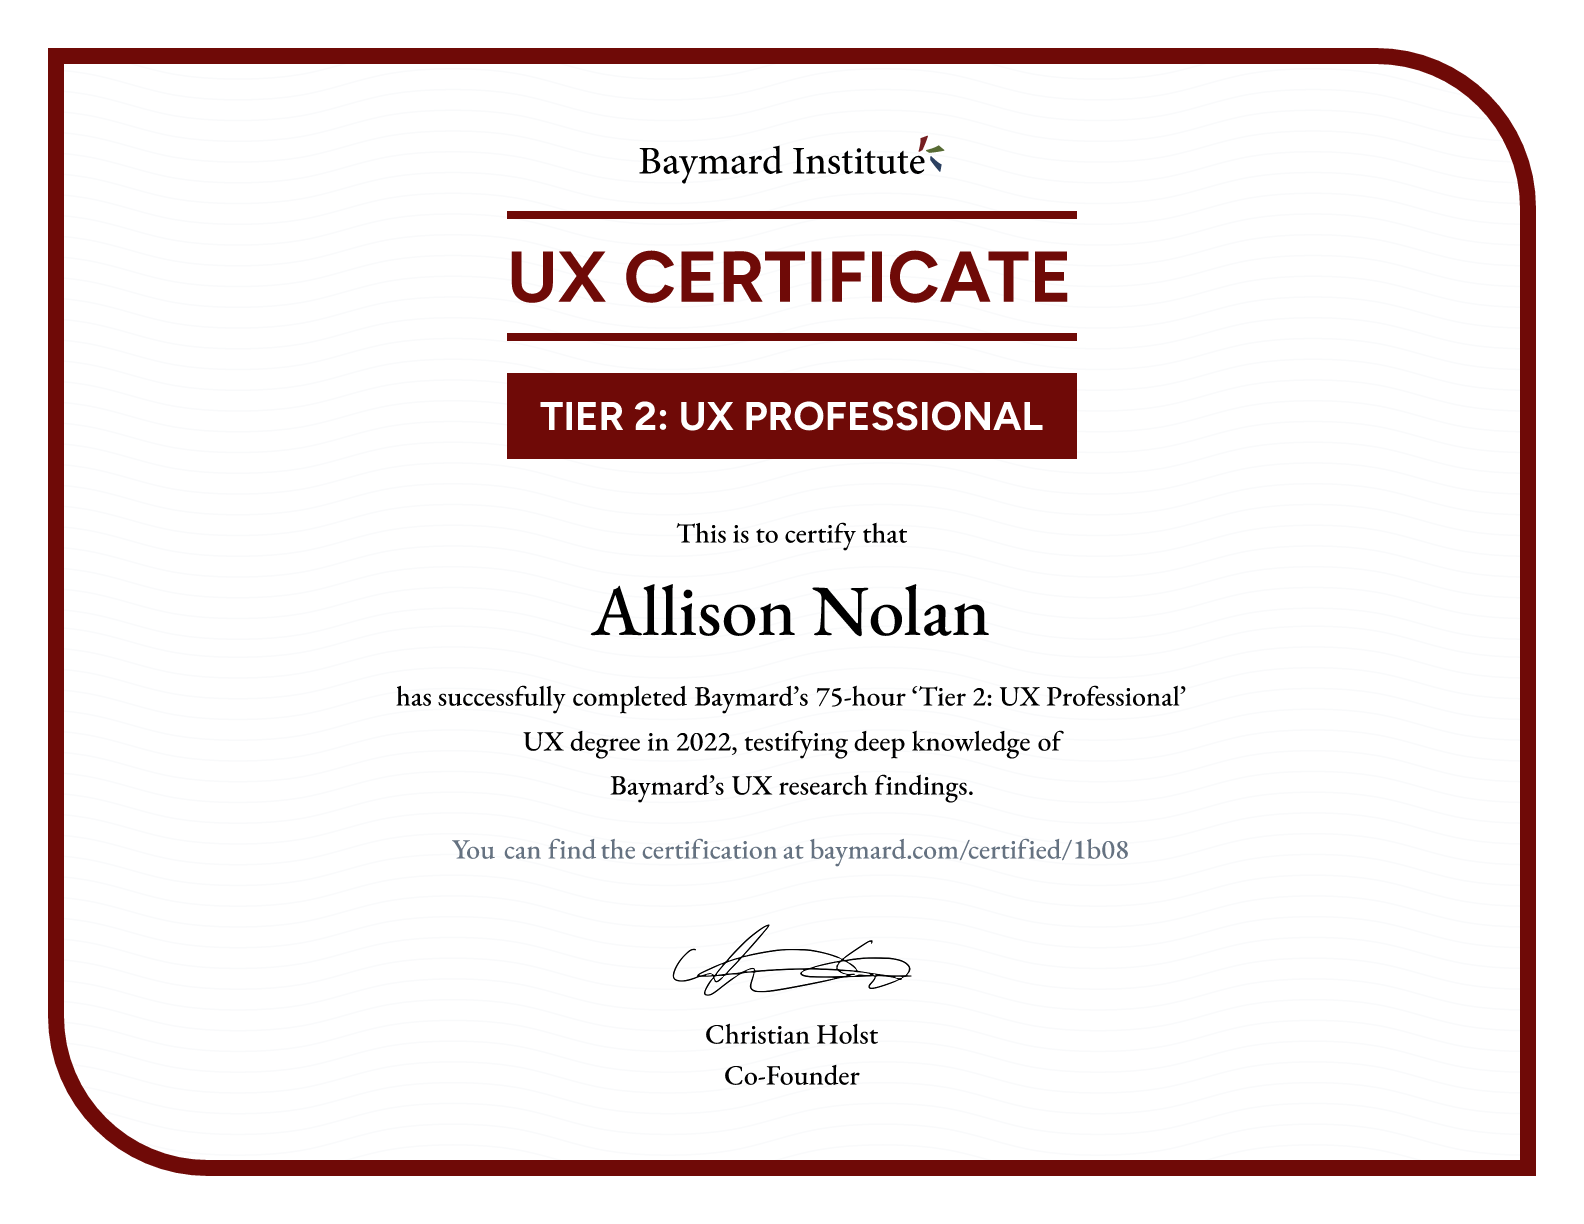 Allison Nolan’s certificate